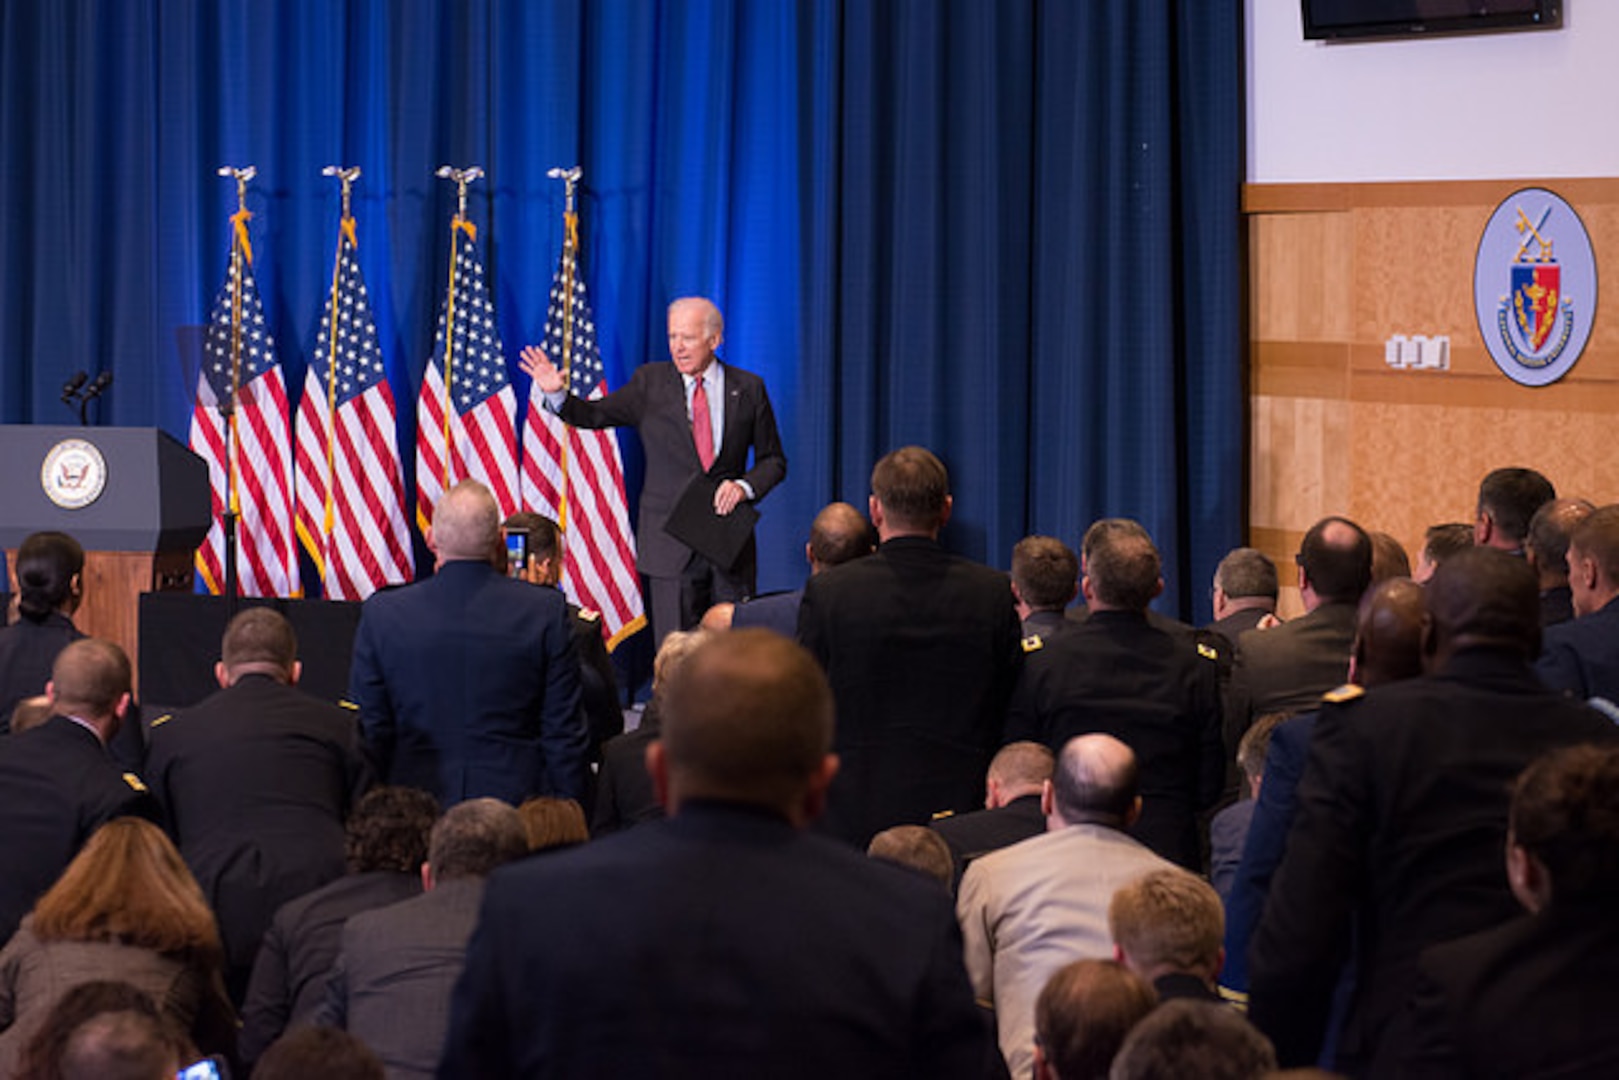 Vice President Joe Biden waves to audience members in Lincoln Hall at NDU on 9 April 2015.